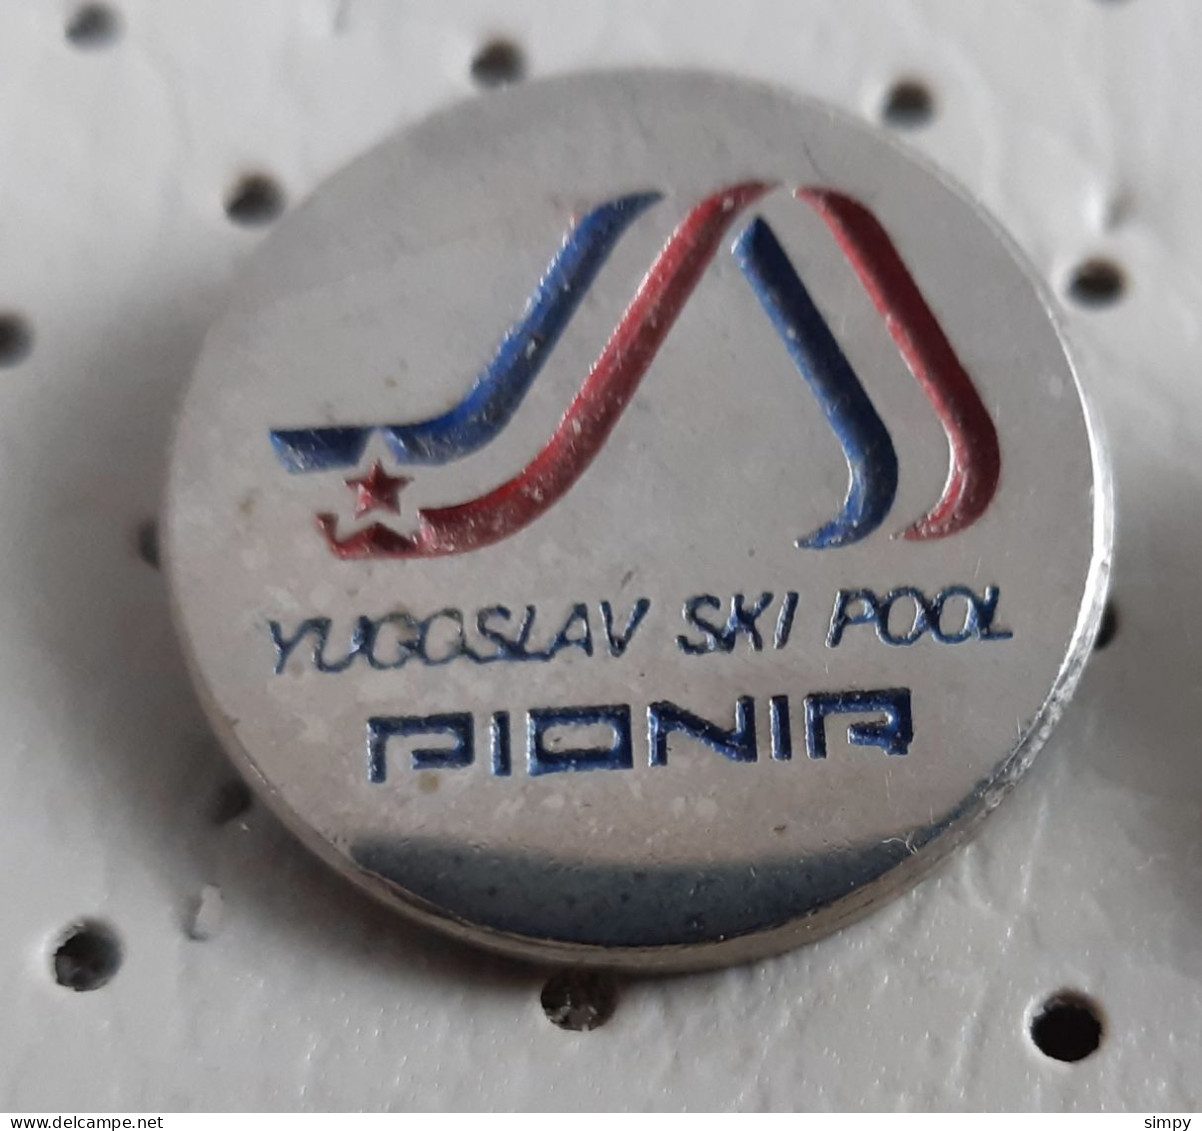 Yugoslav Ski Pool Pionir Novo Mesto Skiing Skier Skii Skiing Slovenia Ex Yugoslavia Pin - Sport Invernali